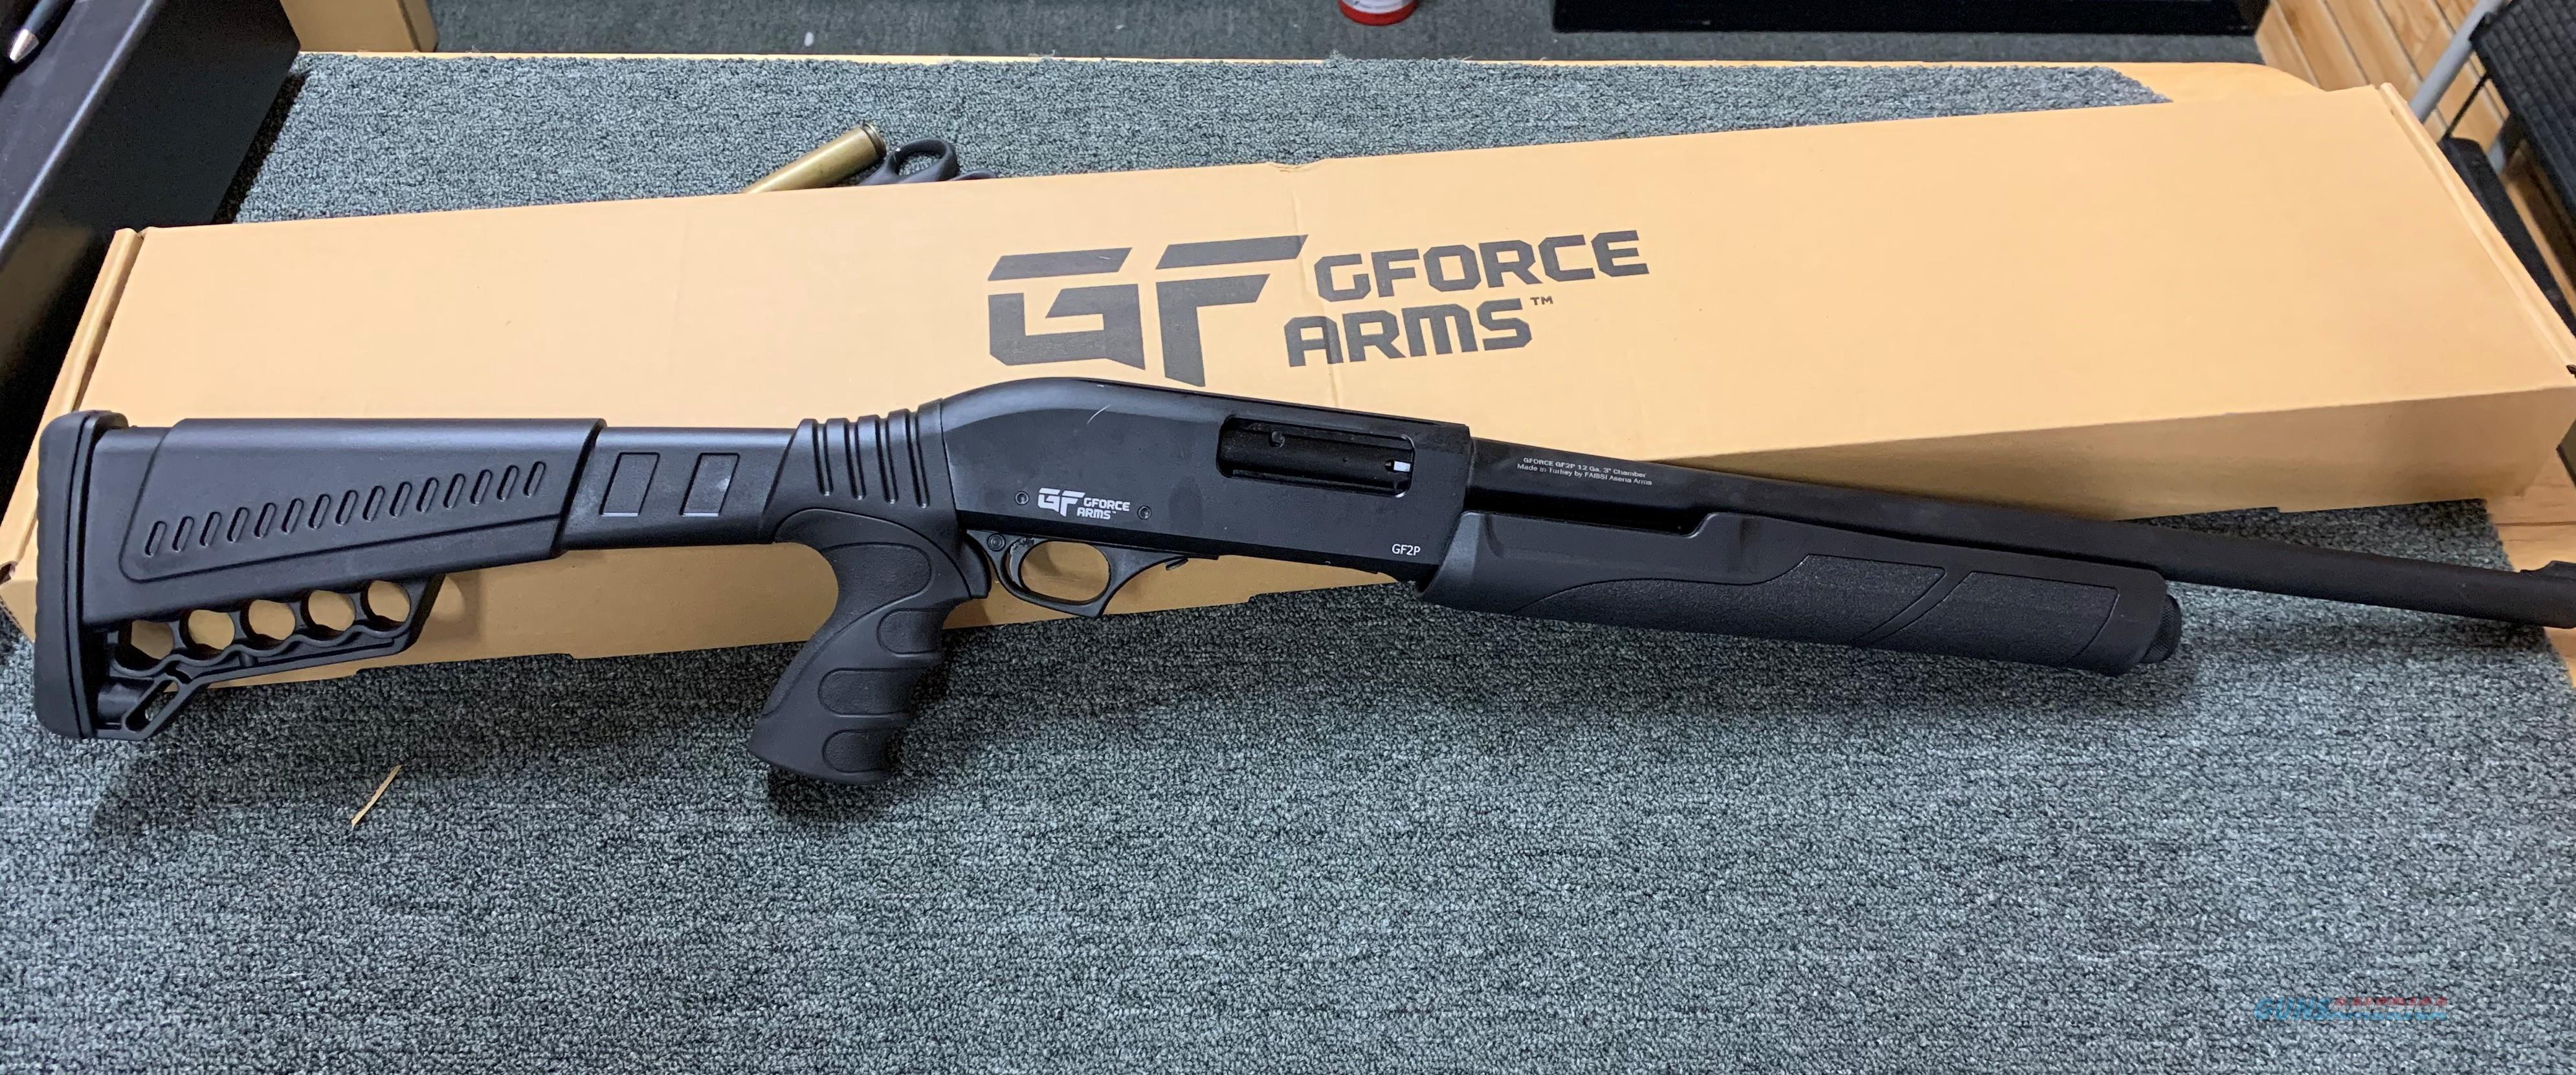 g force 12 gauge pump shotgun